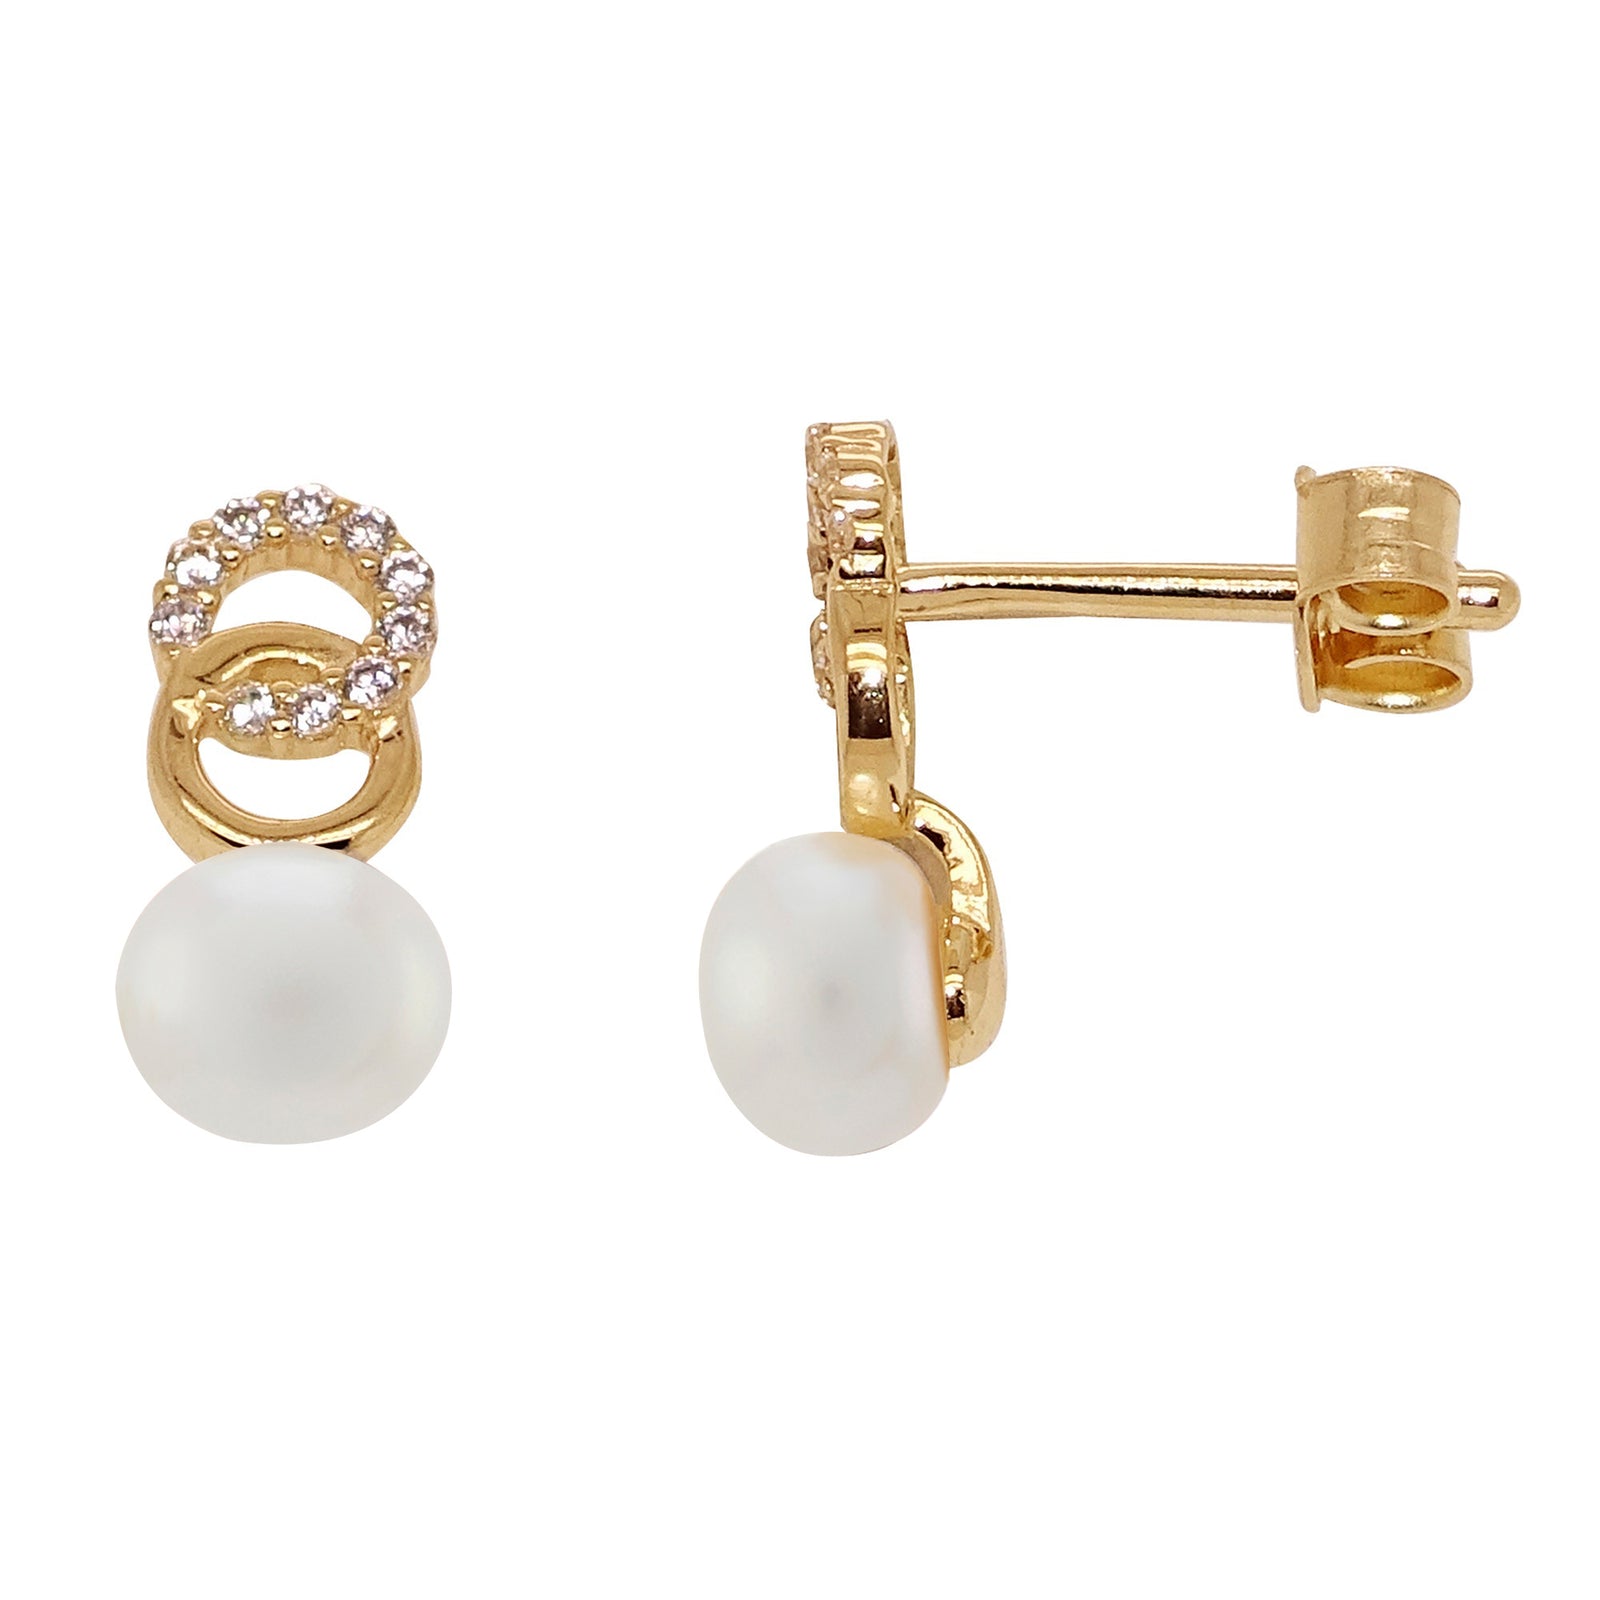 9ct gold 5.5mm fresh water pearl & cz stud earrings